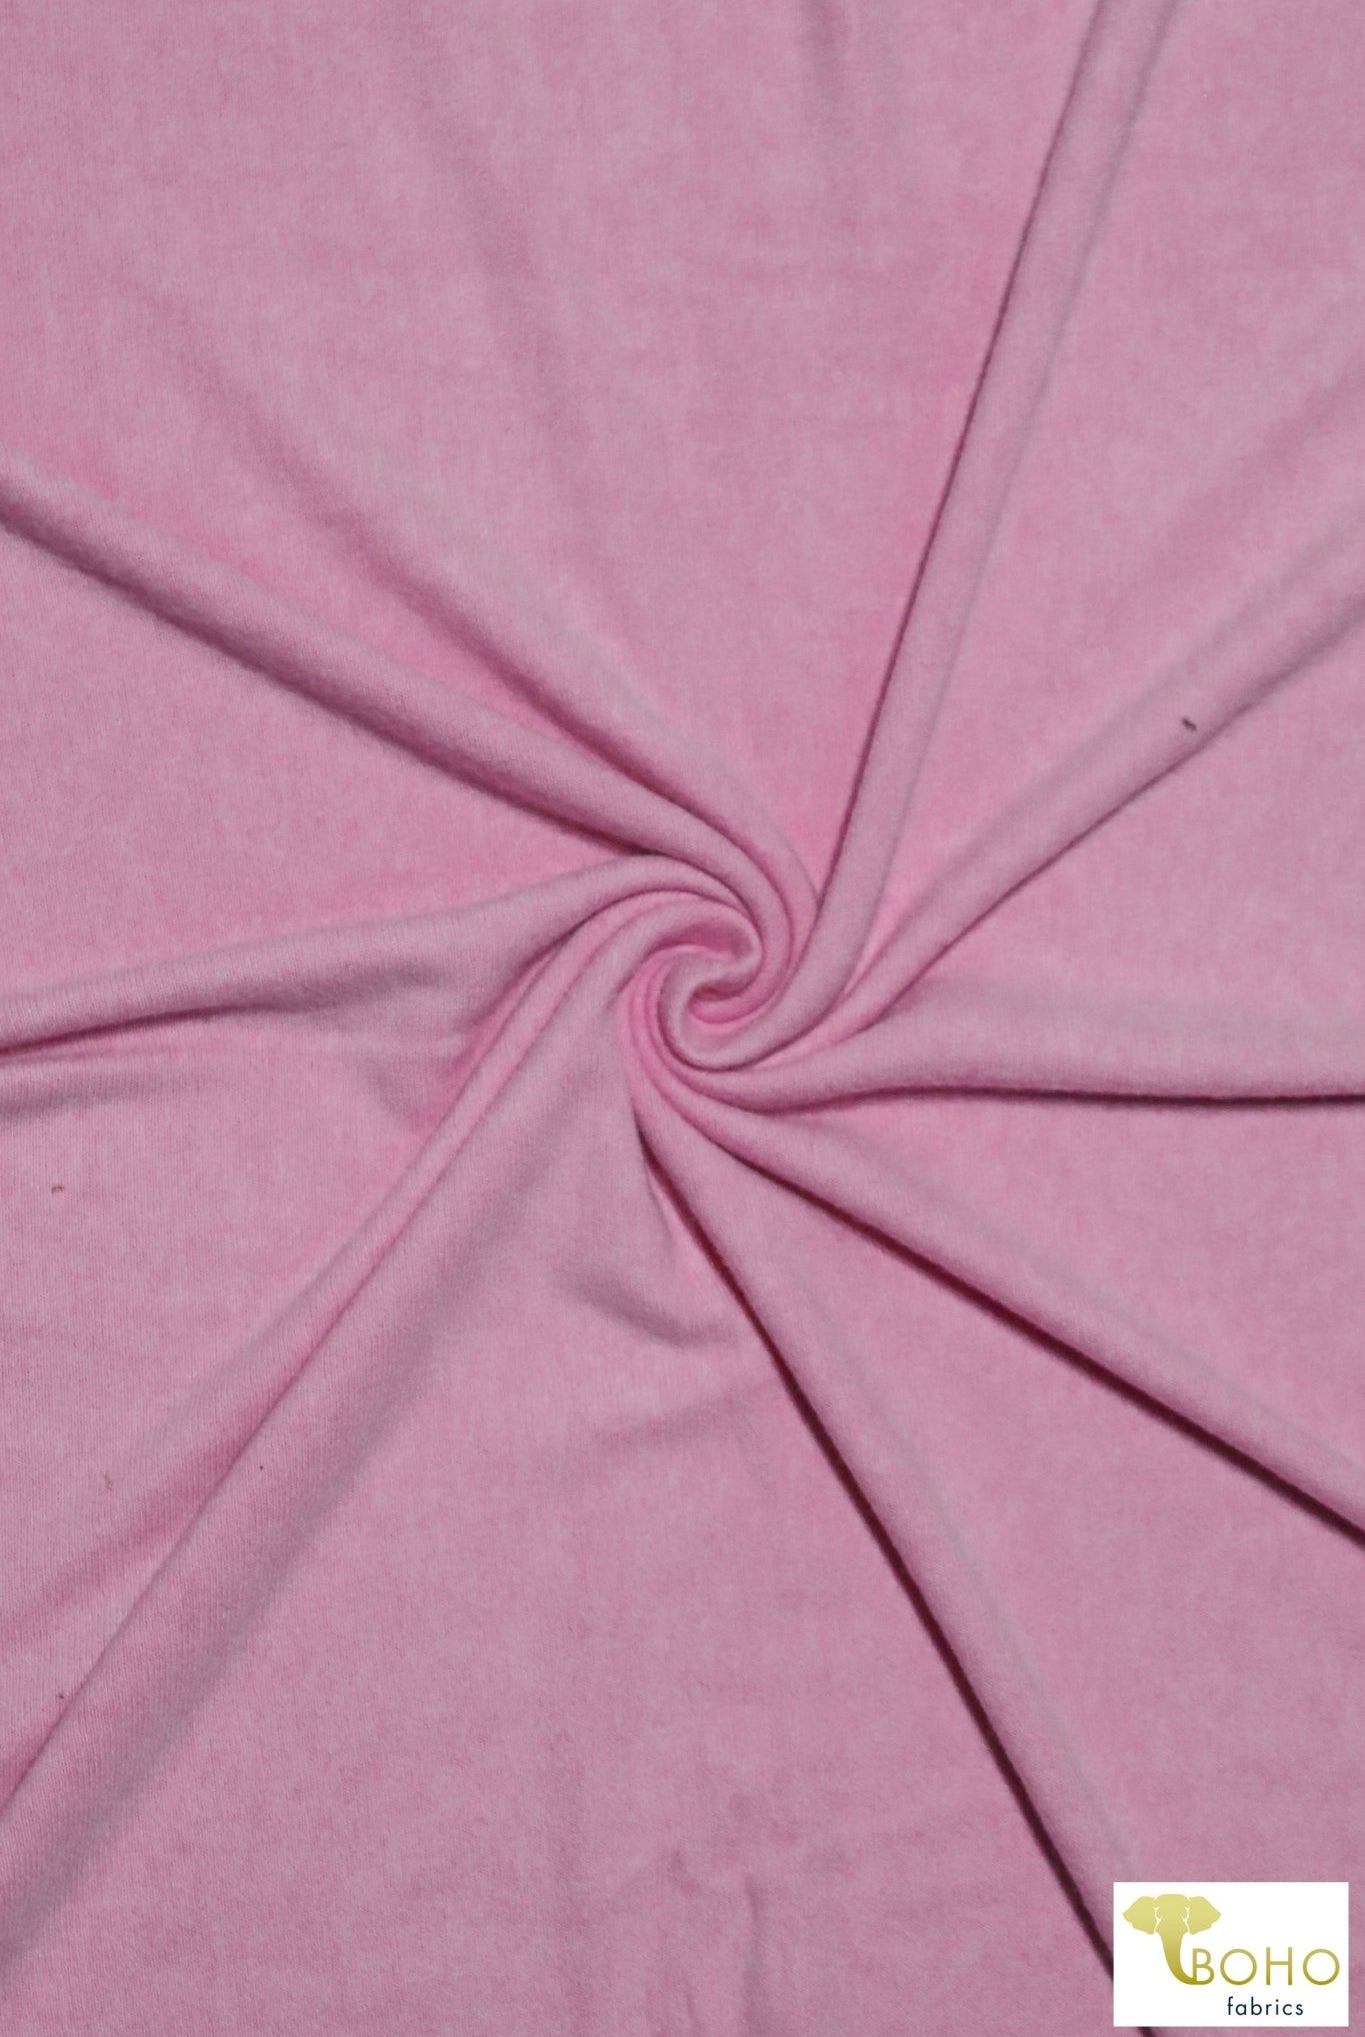 Sweet Pink, Brushed Hacci Sweater Knit. SWTR-213 - Boho Fabrics